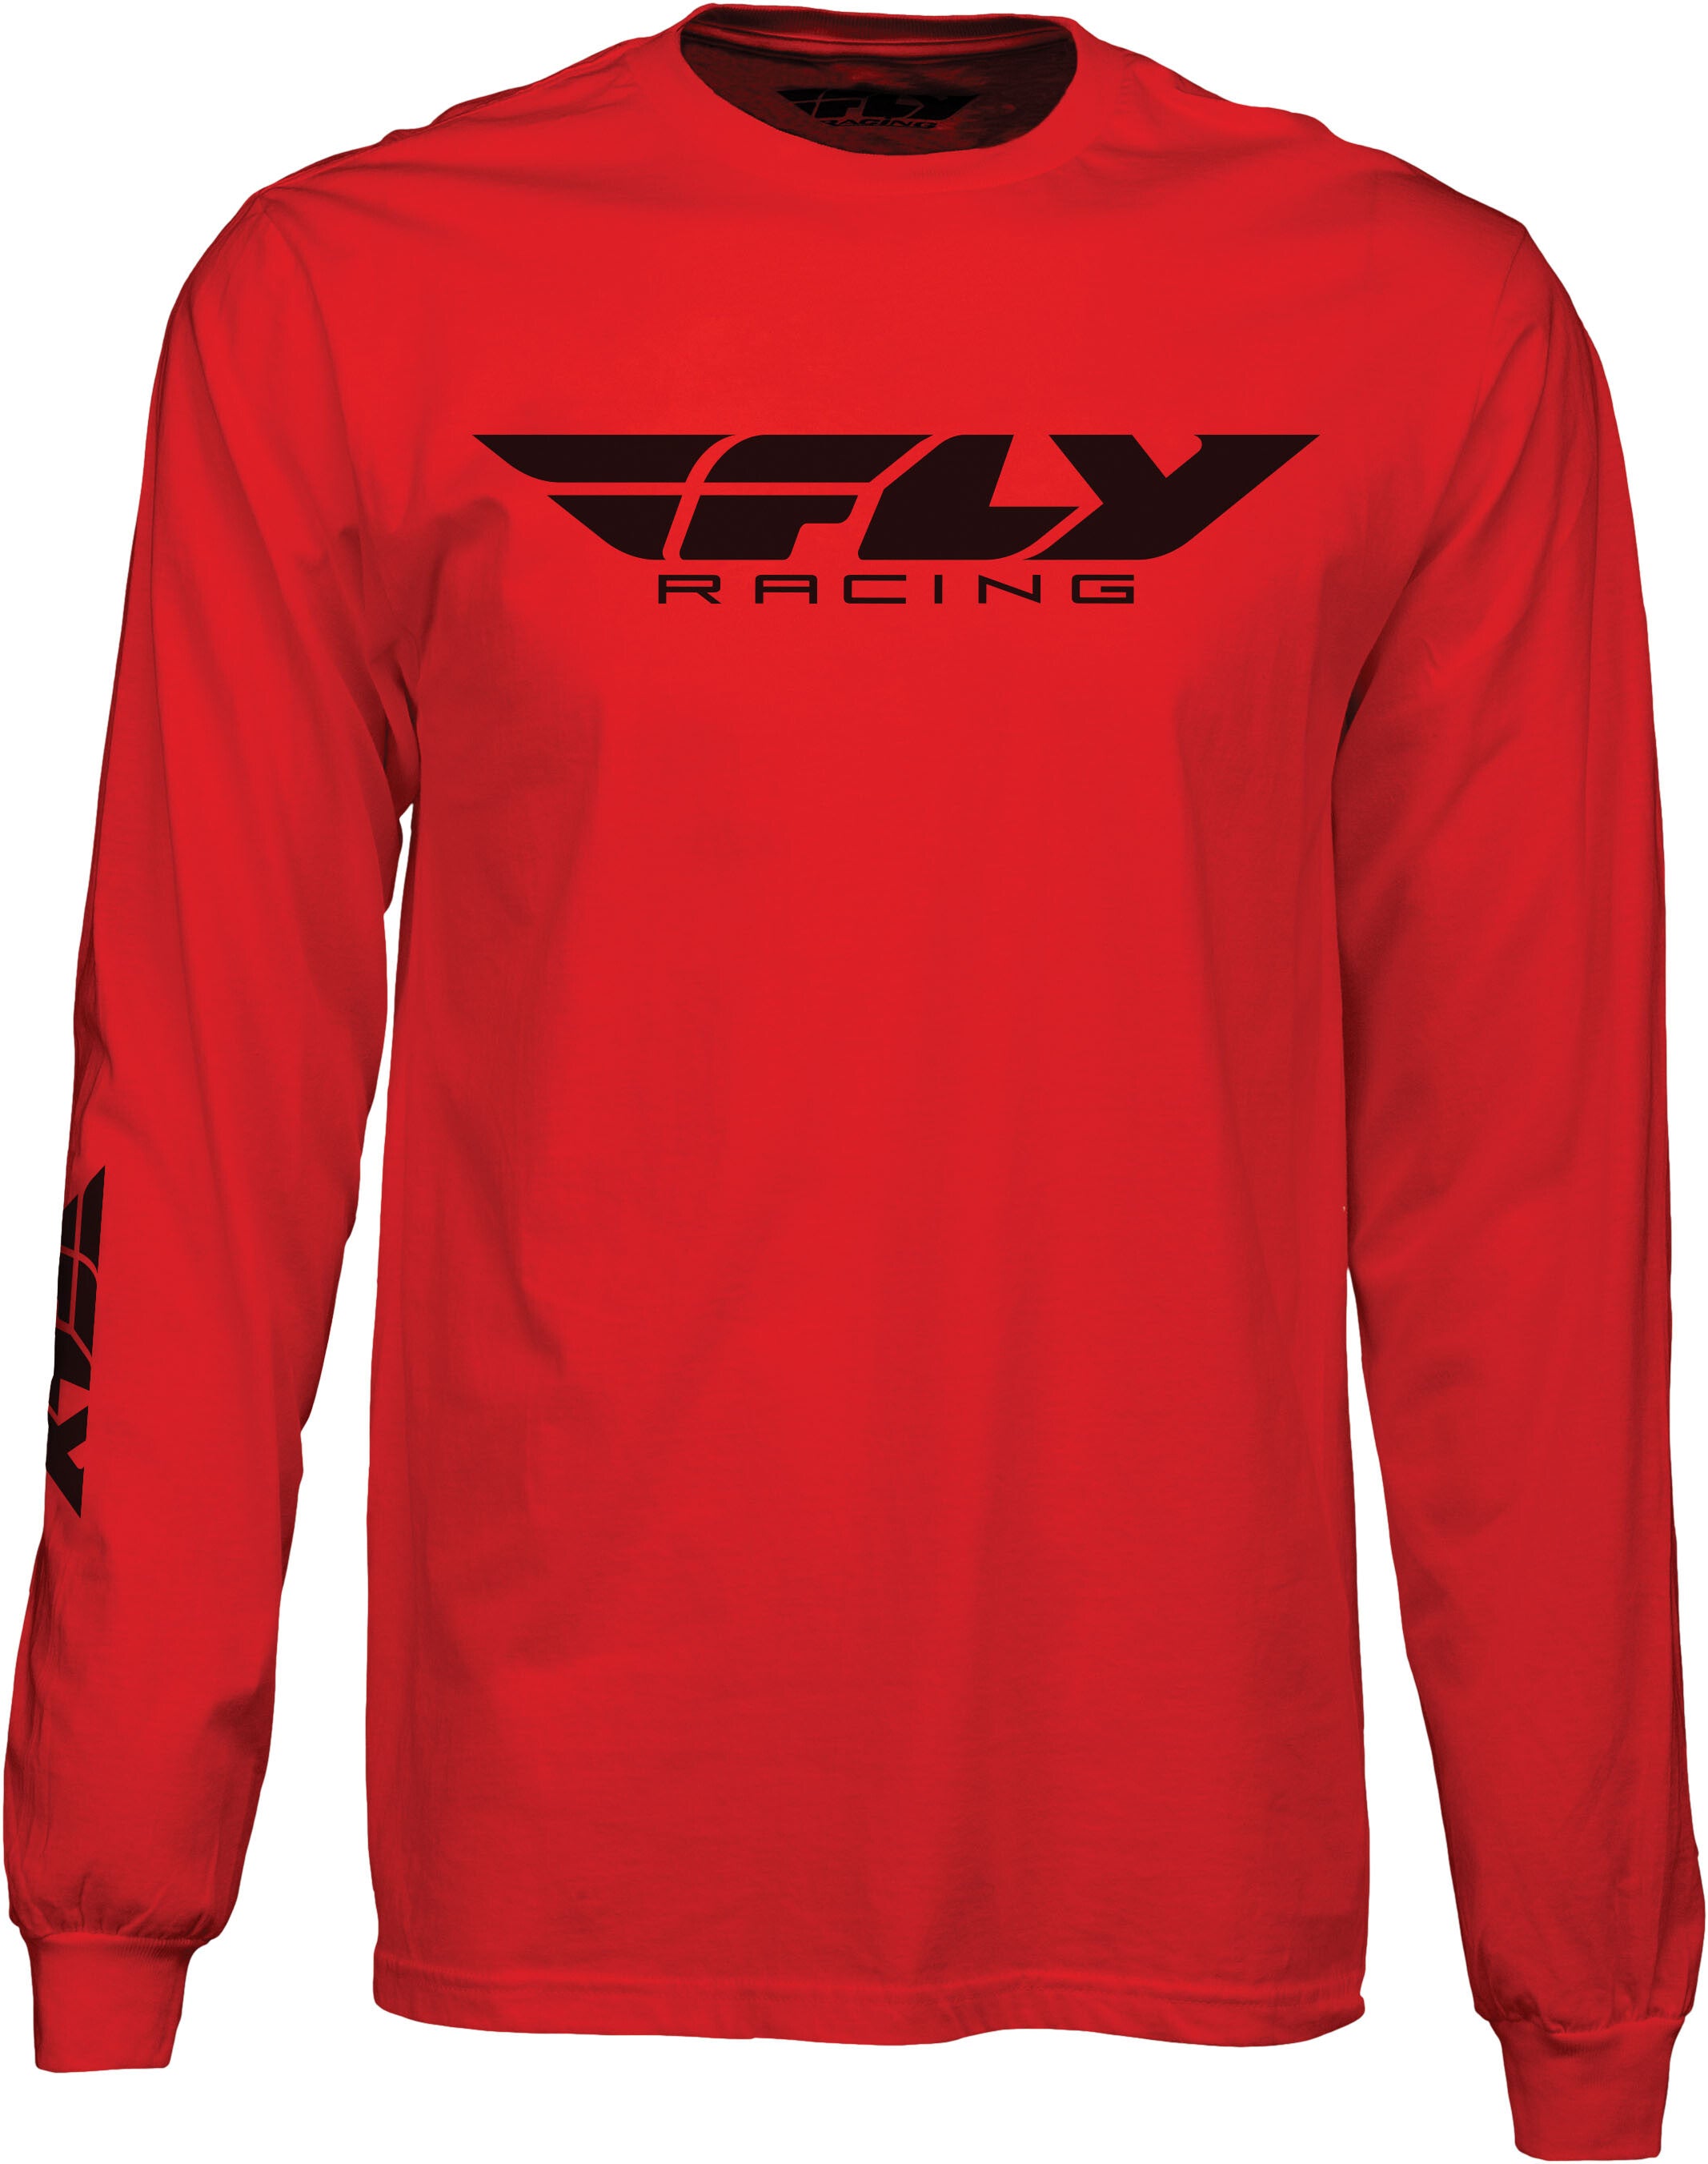 Fly Racing Corporate Long Sleeve Tee Red Medium 352-4148M